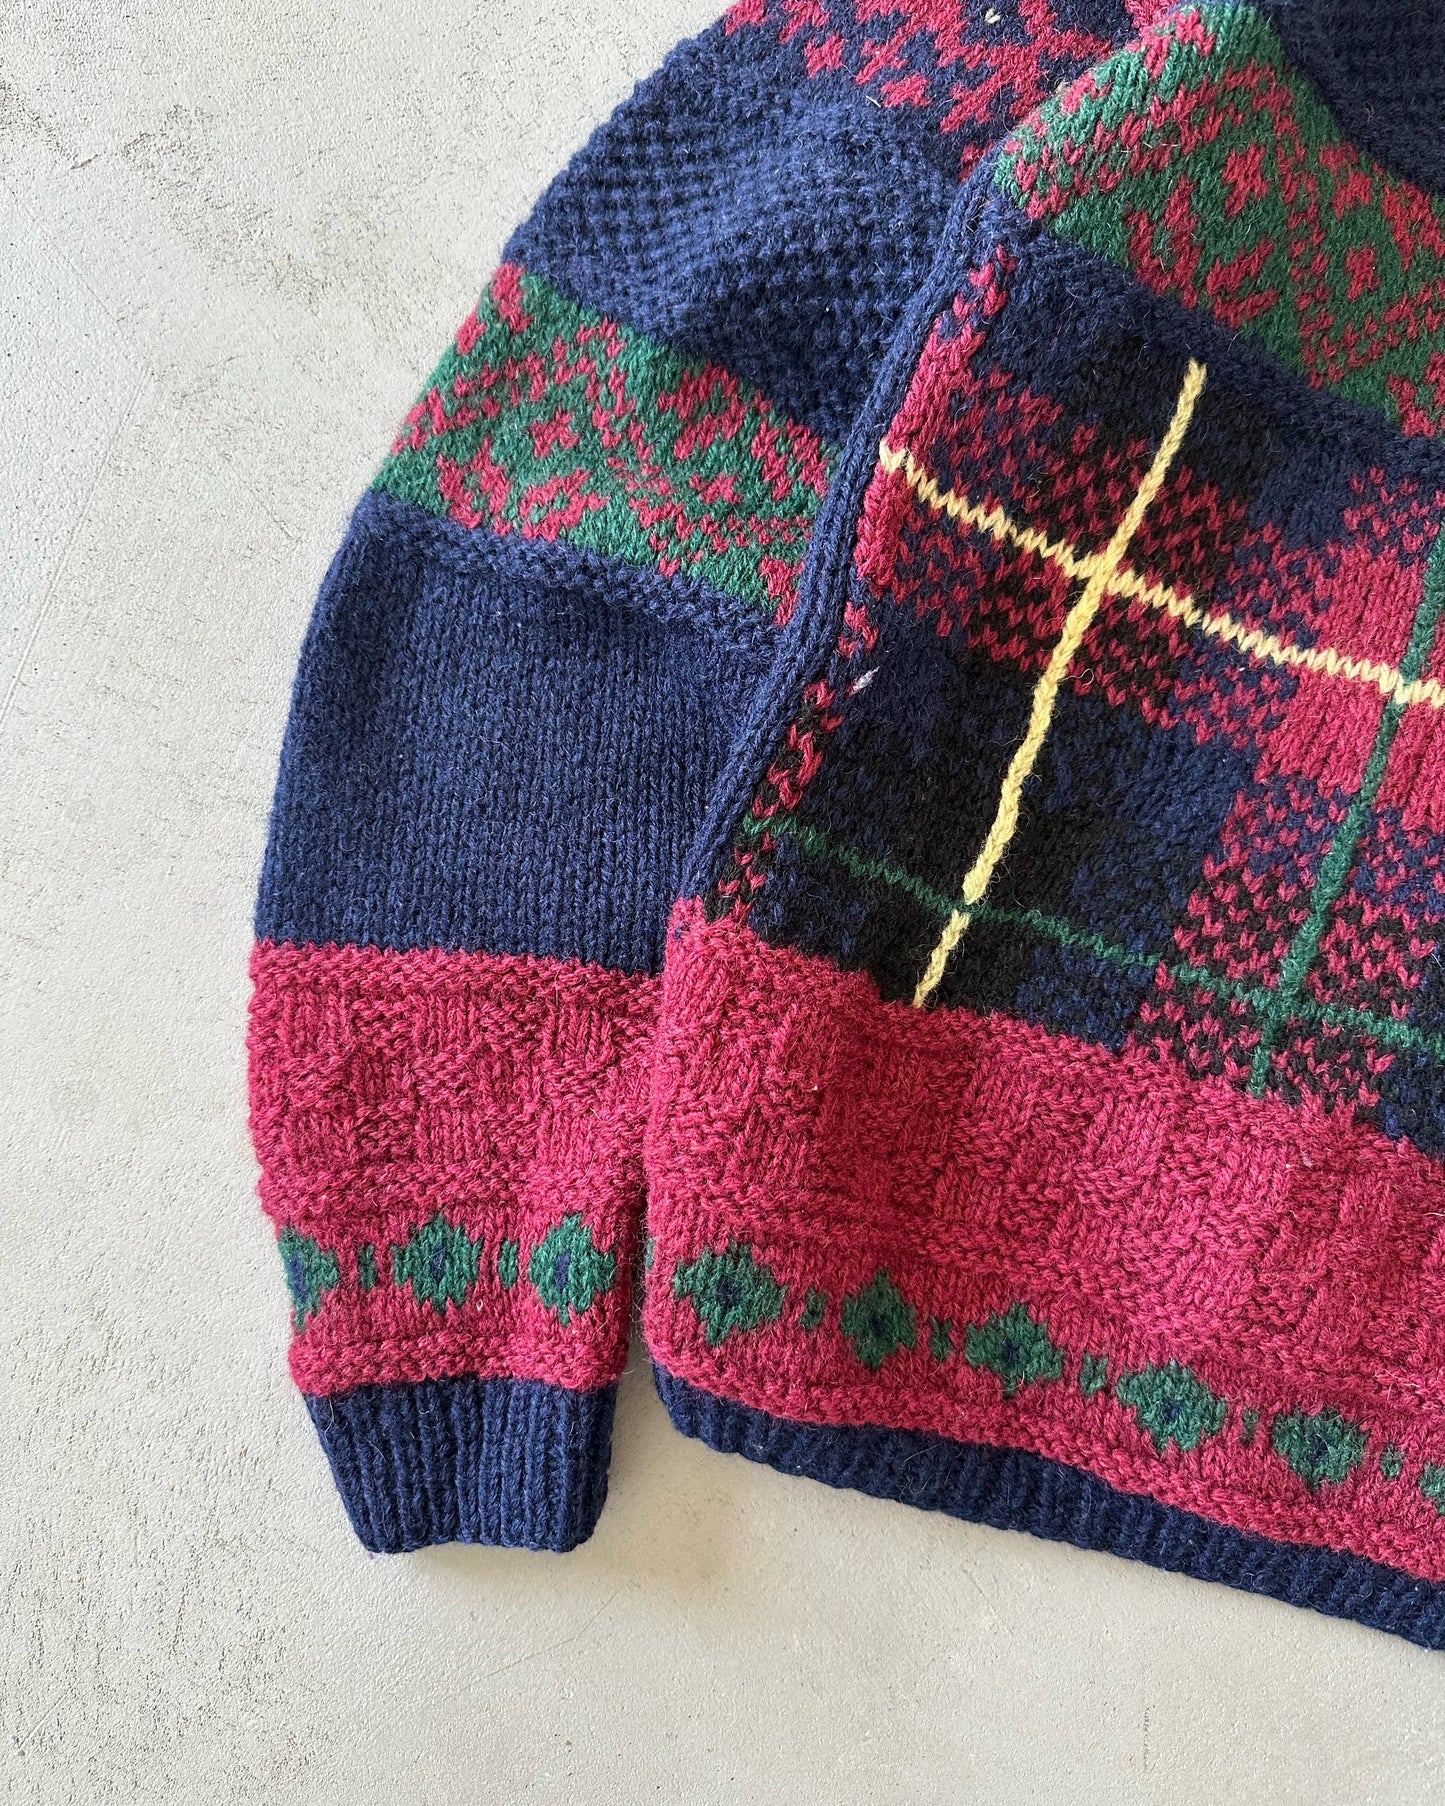 1990s - Navy/Burgundy Plaid Wool Sweater - (W)S